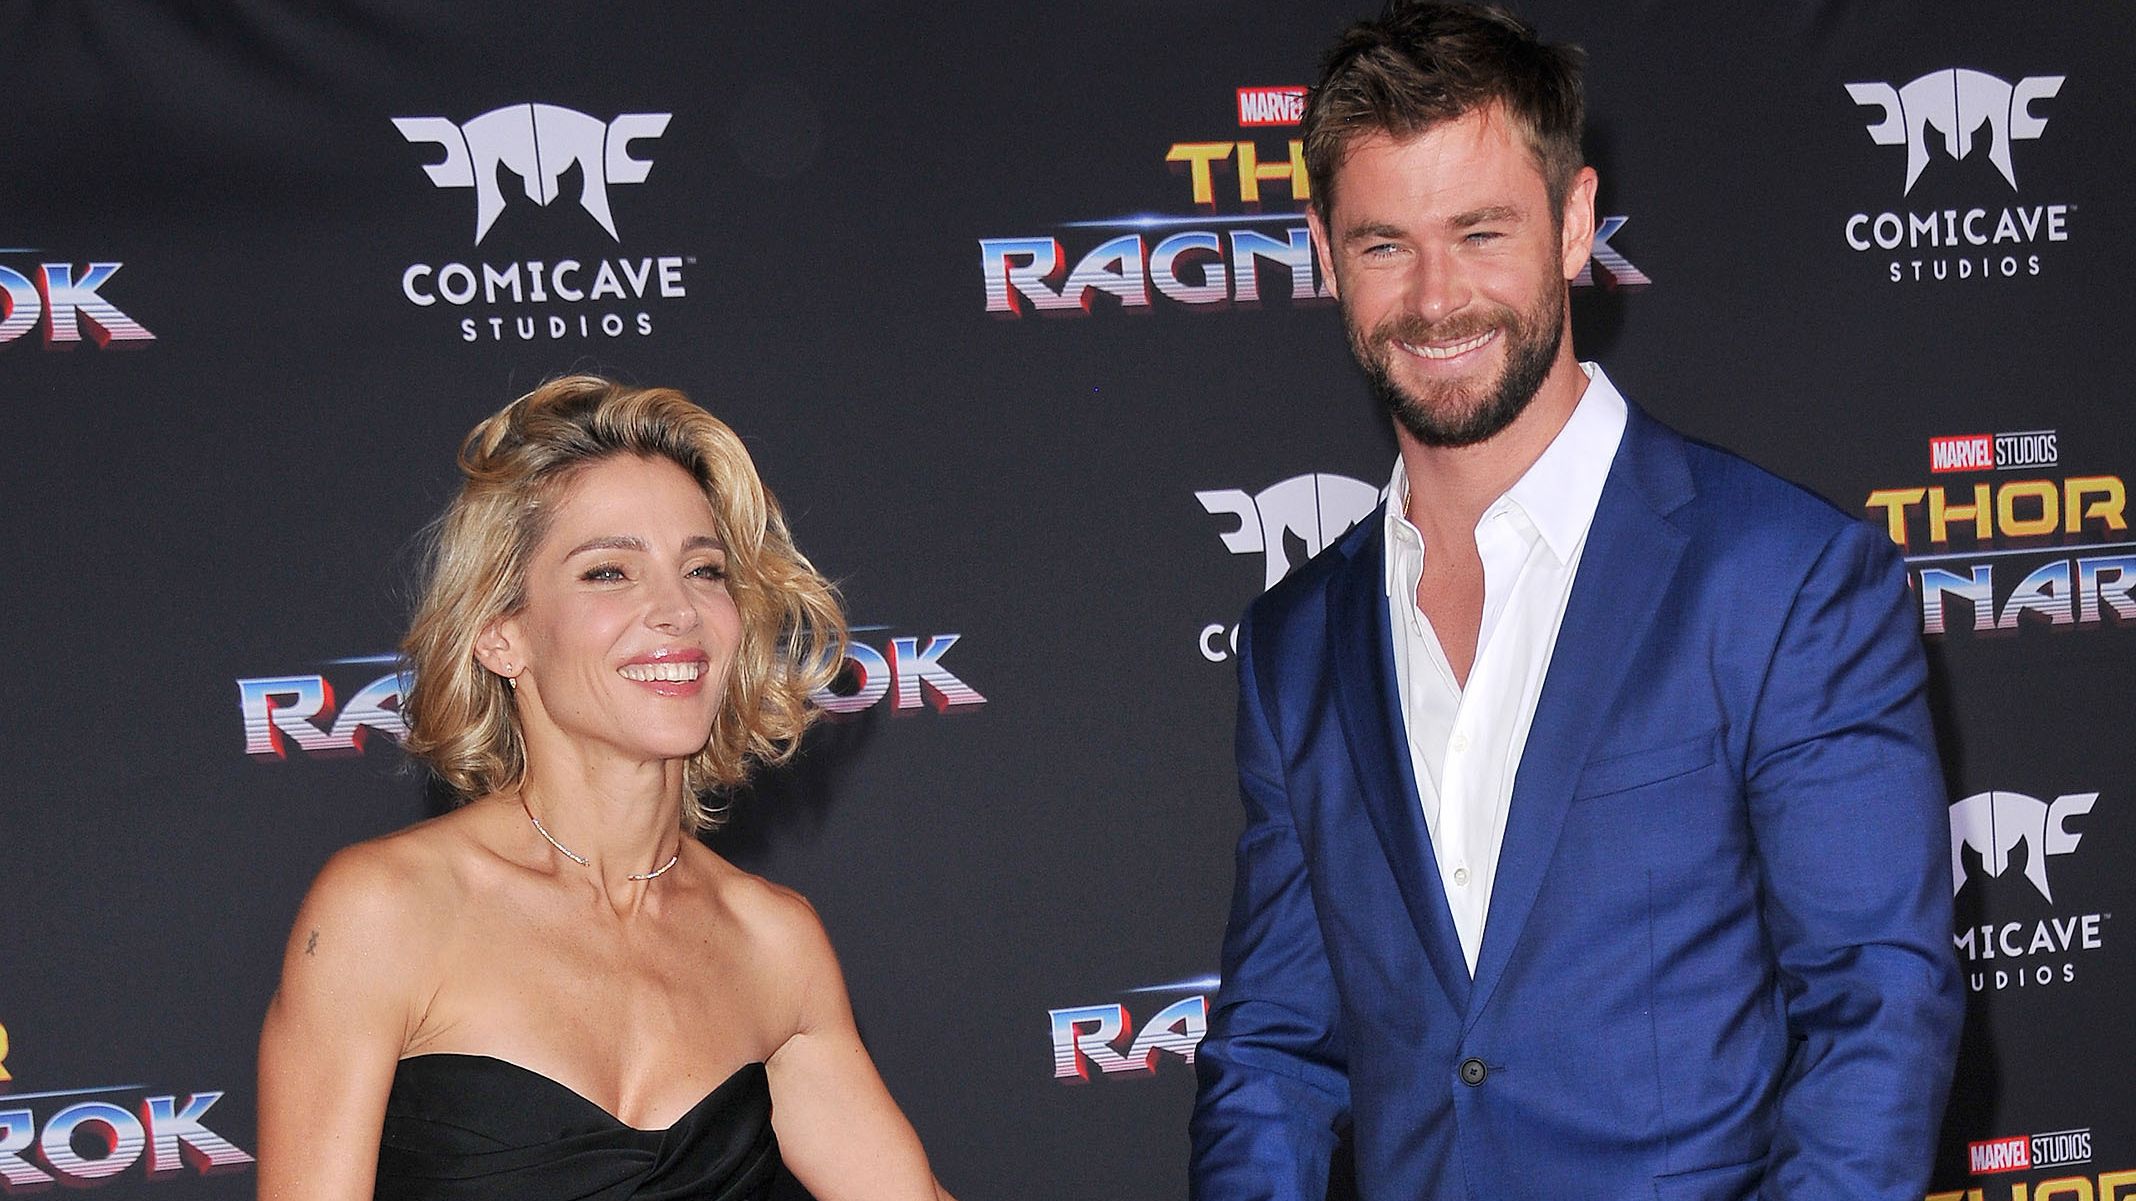 Chris Hemsworth at Thor Ragnarok premiere in LA.